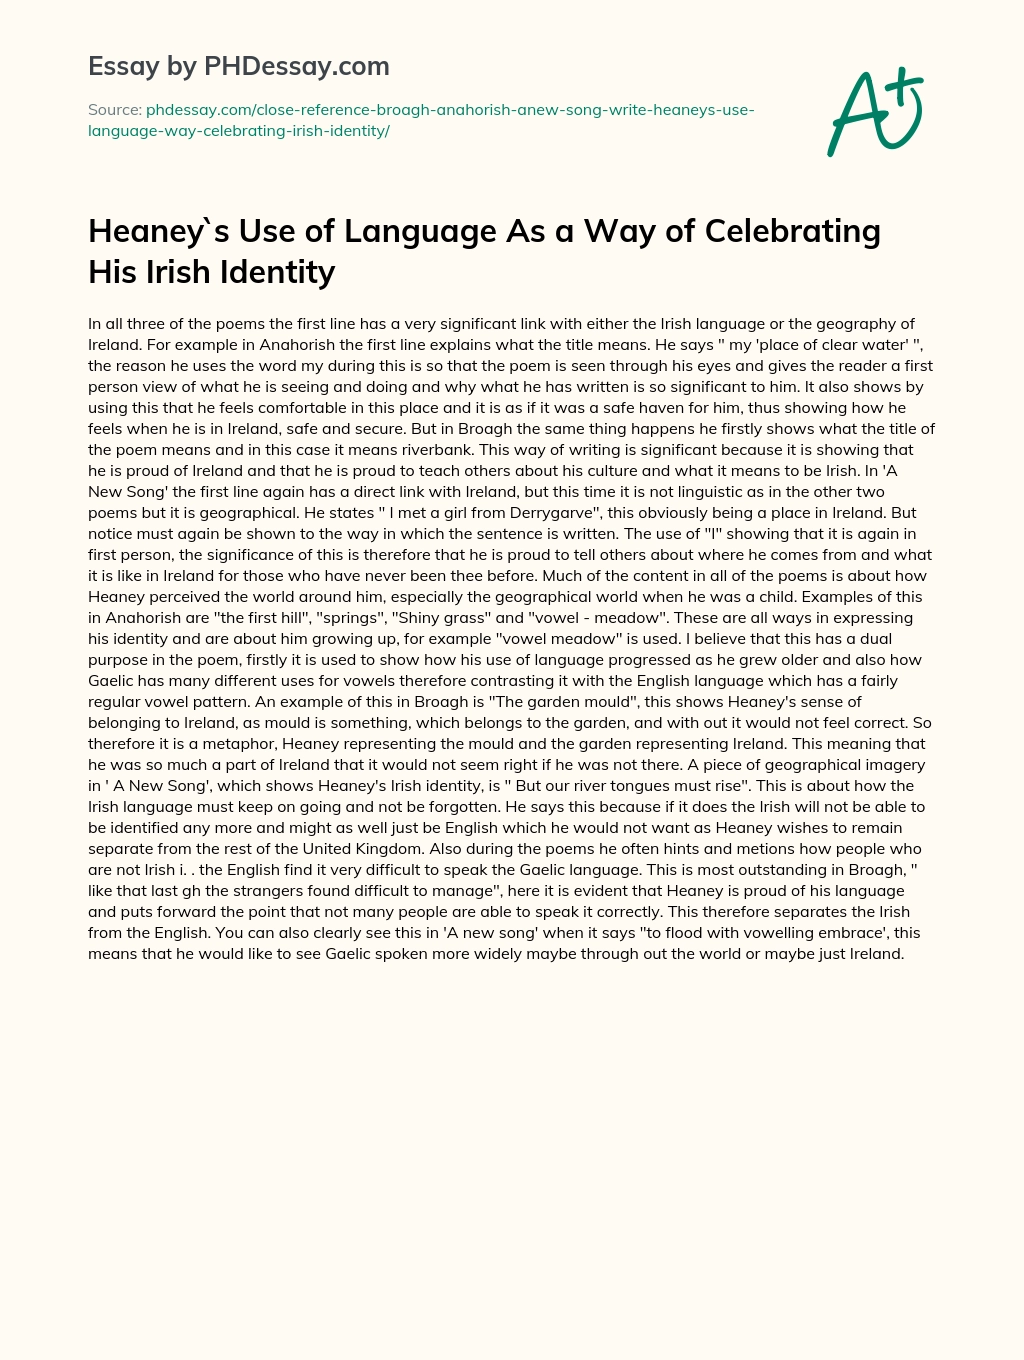 Heaney`s Use of Language As a Way of Celebrating His Irish Identity essay